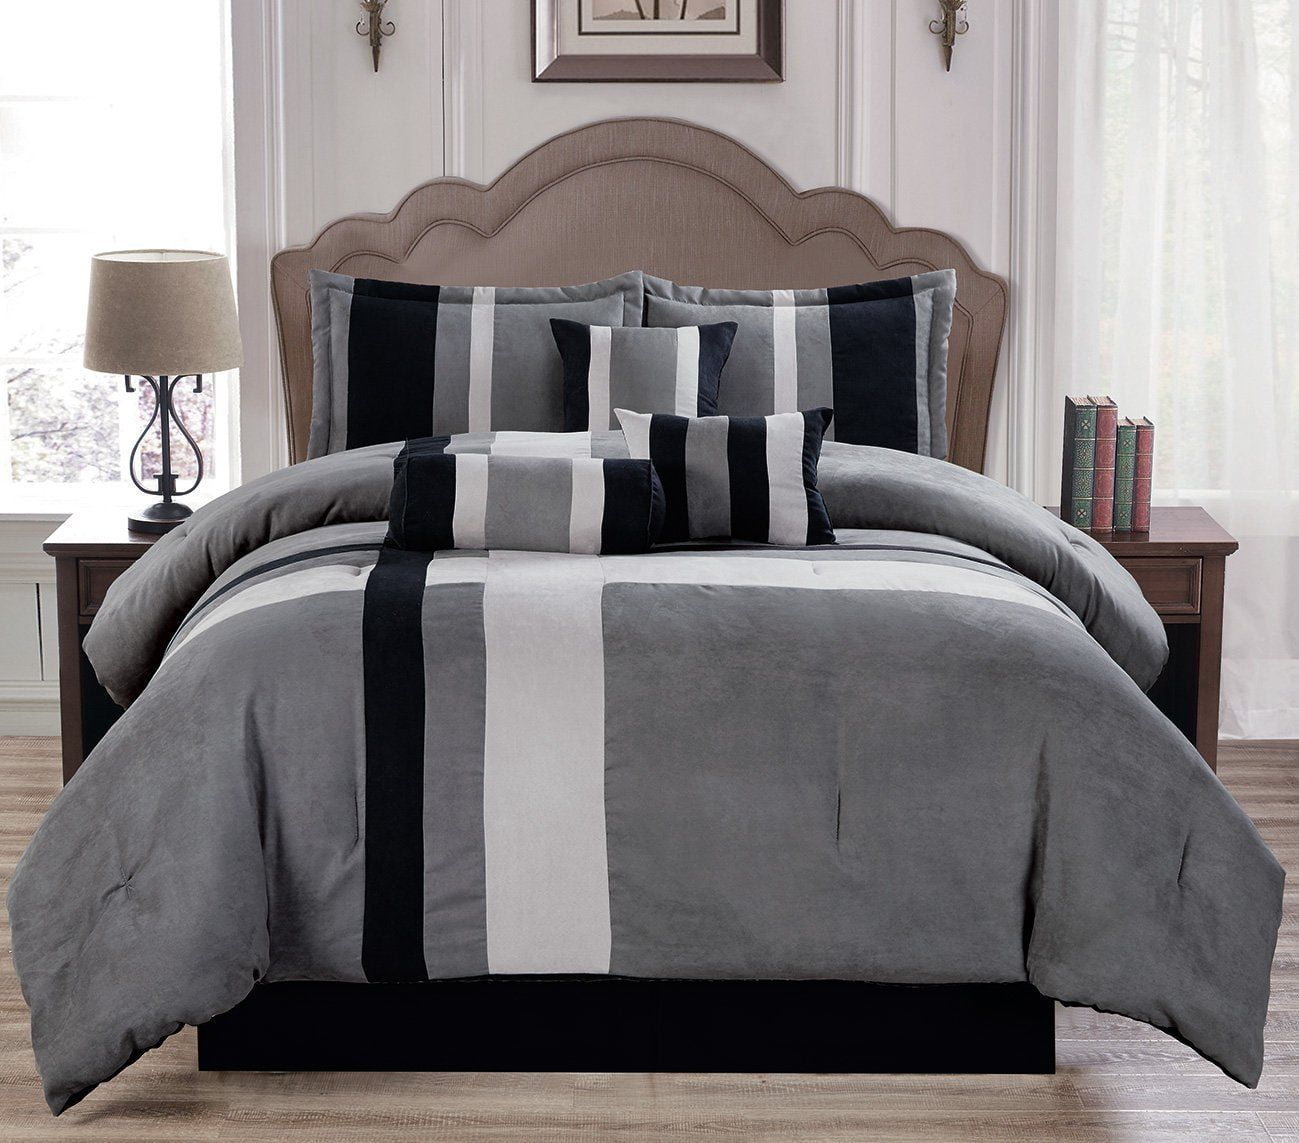 Soft Suede Gray Aberdeen 7 Piece Comforter Set - Full Size - Walmart